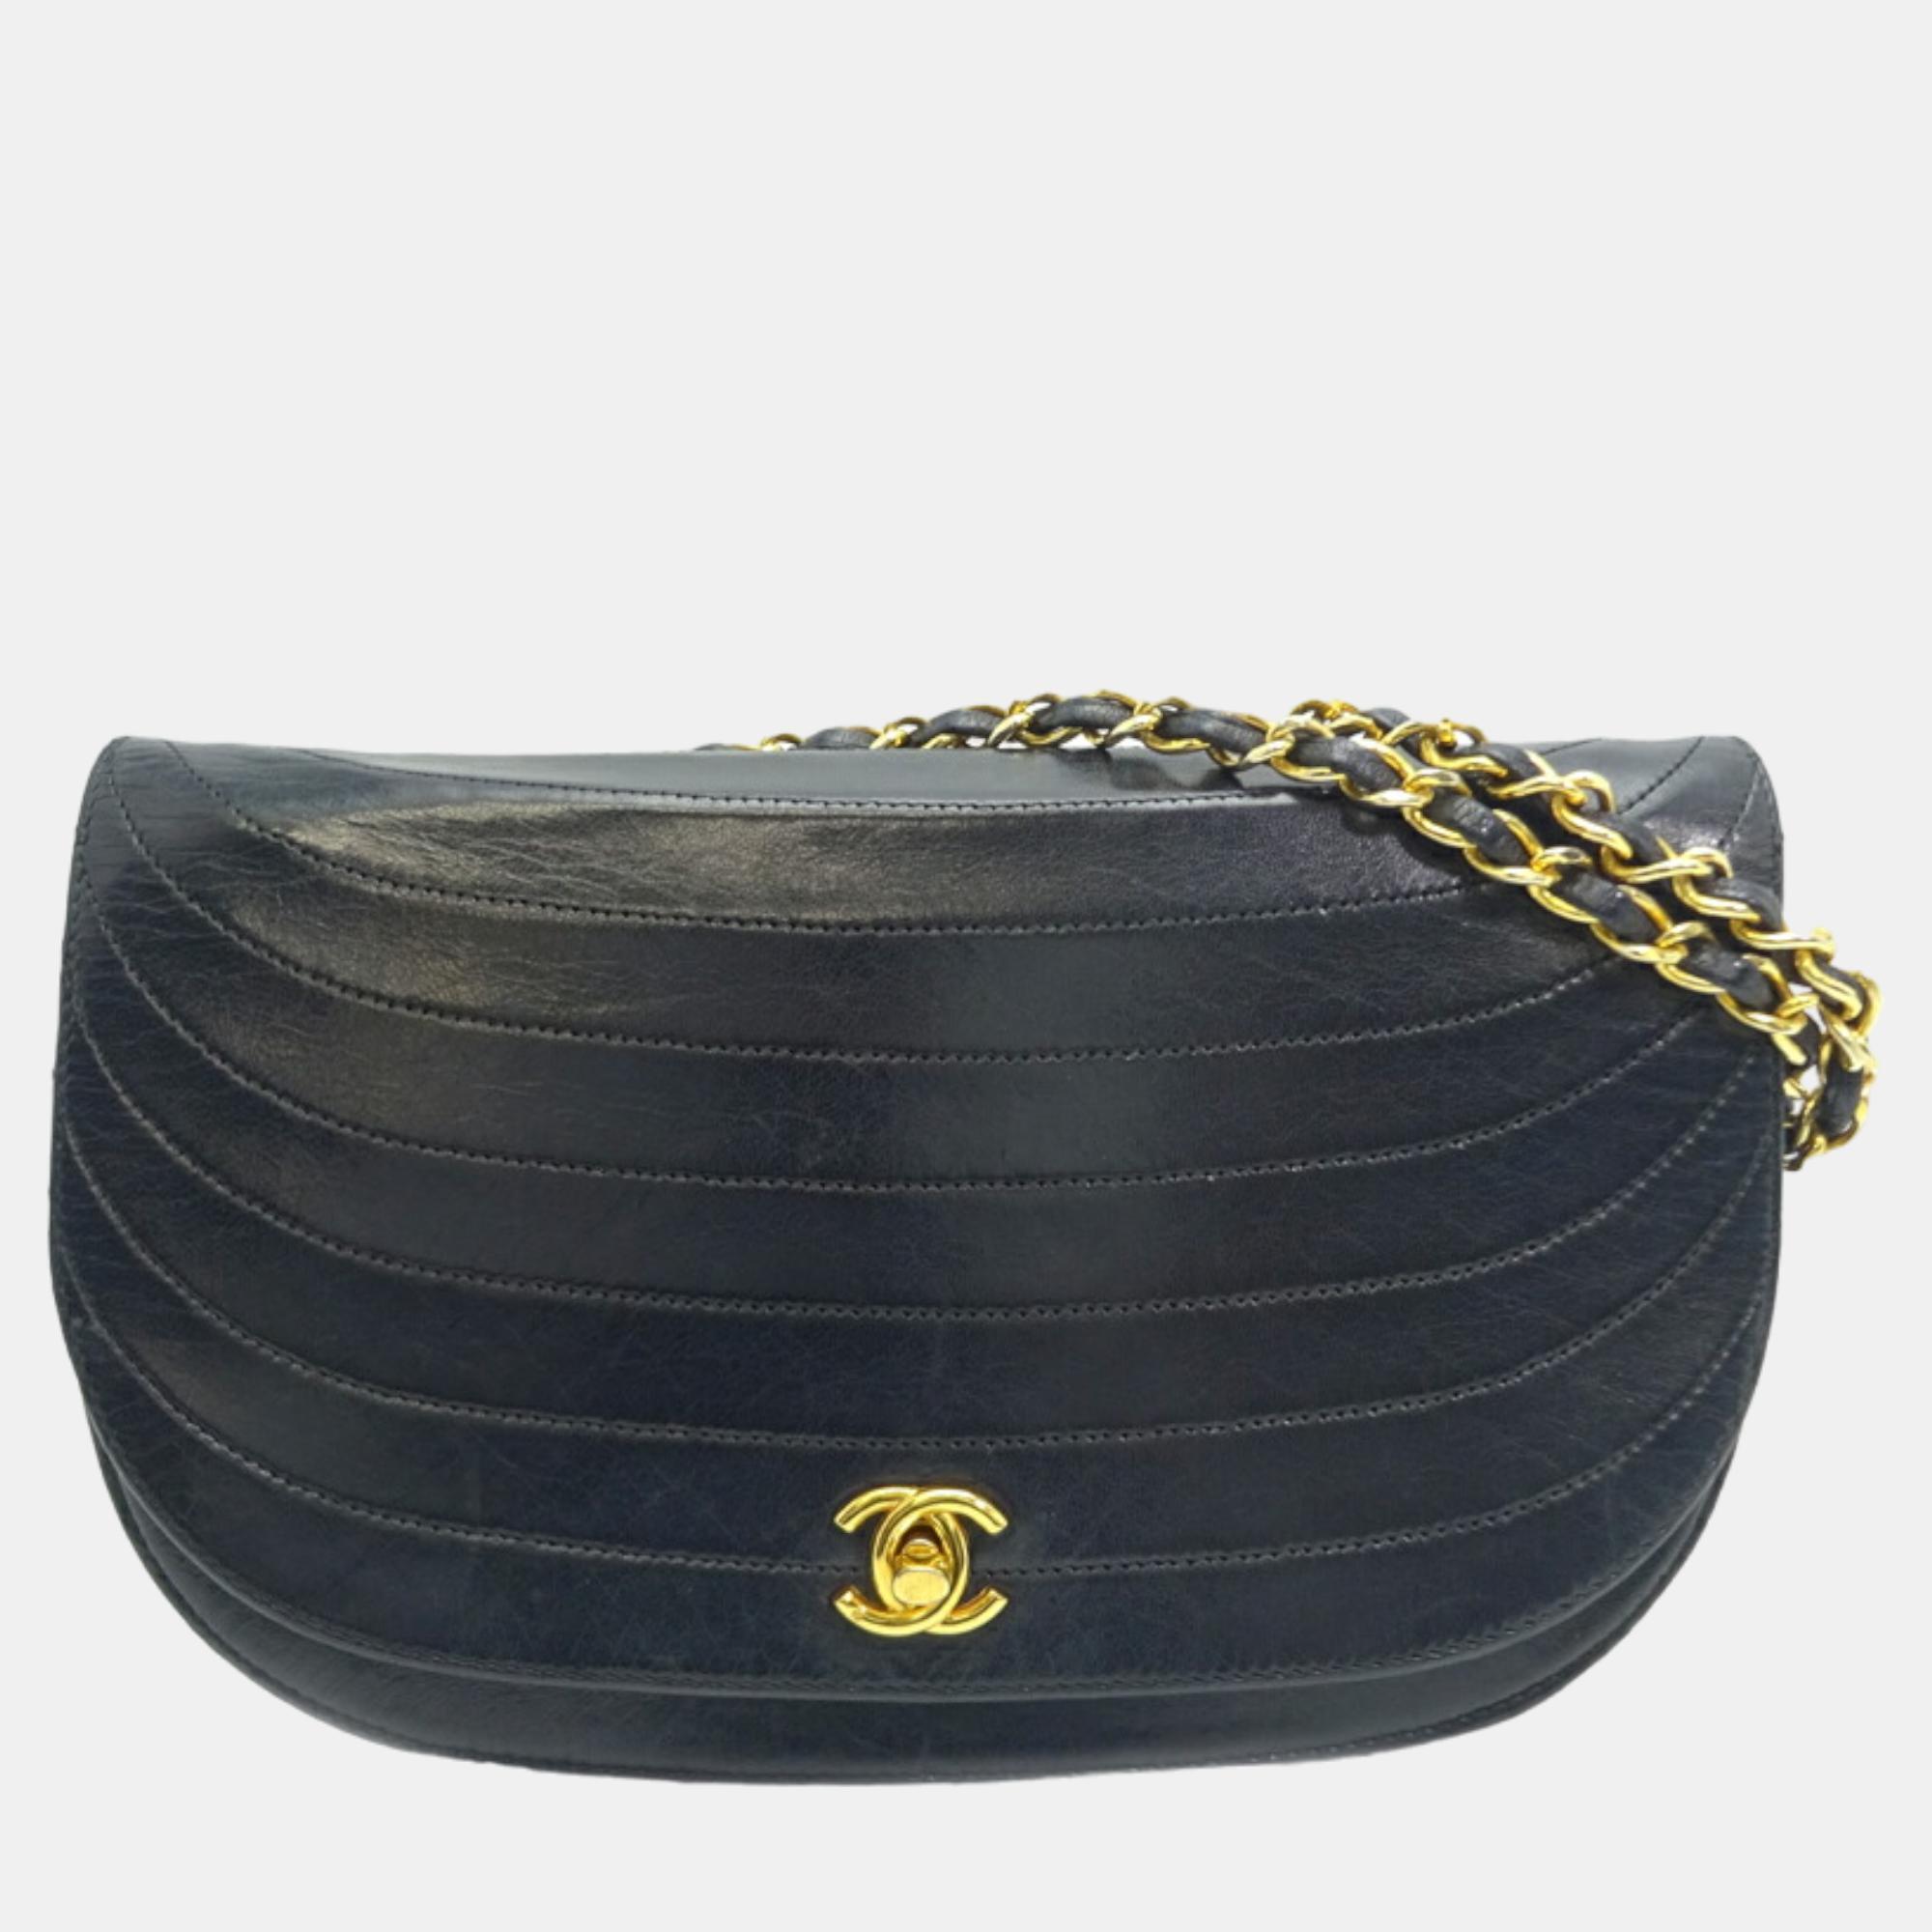 Chanel black leather cc half moon chain shoulder bag